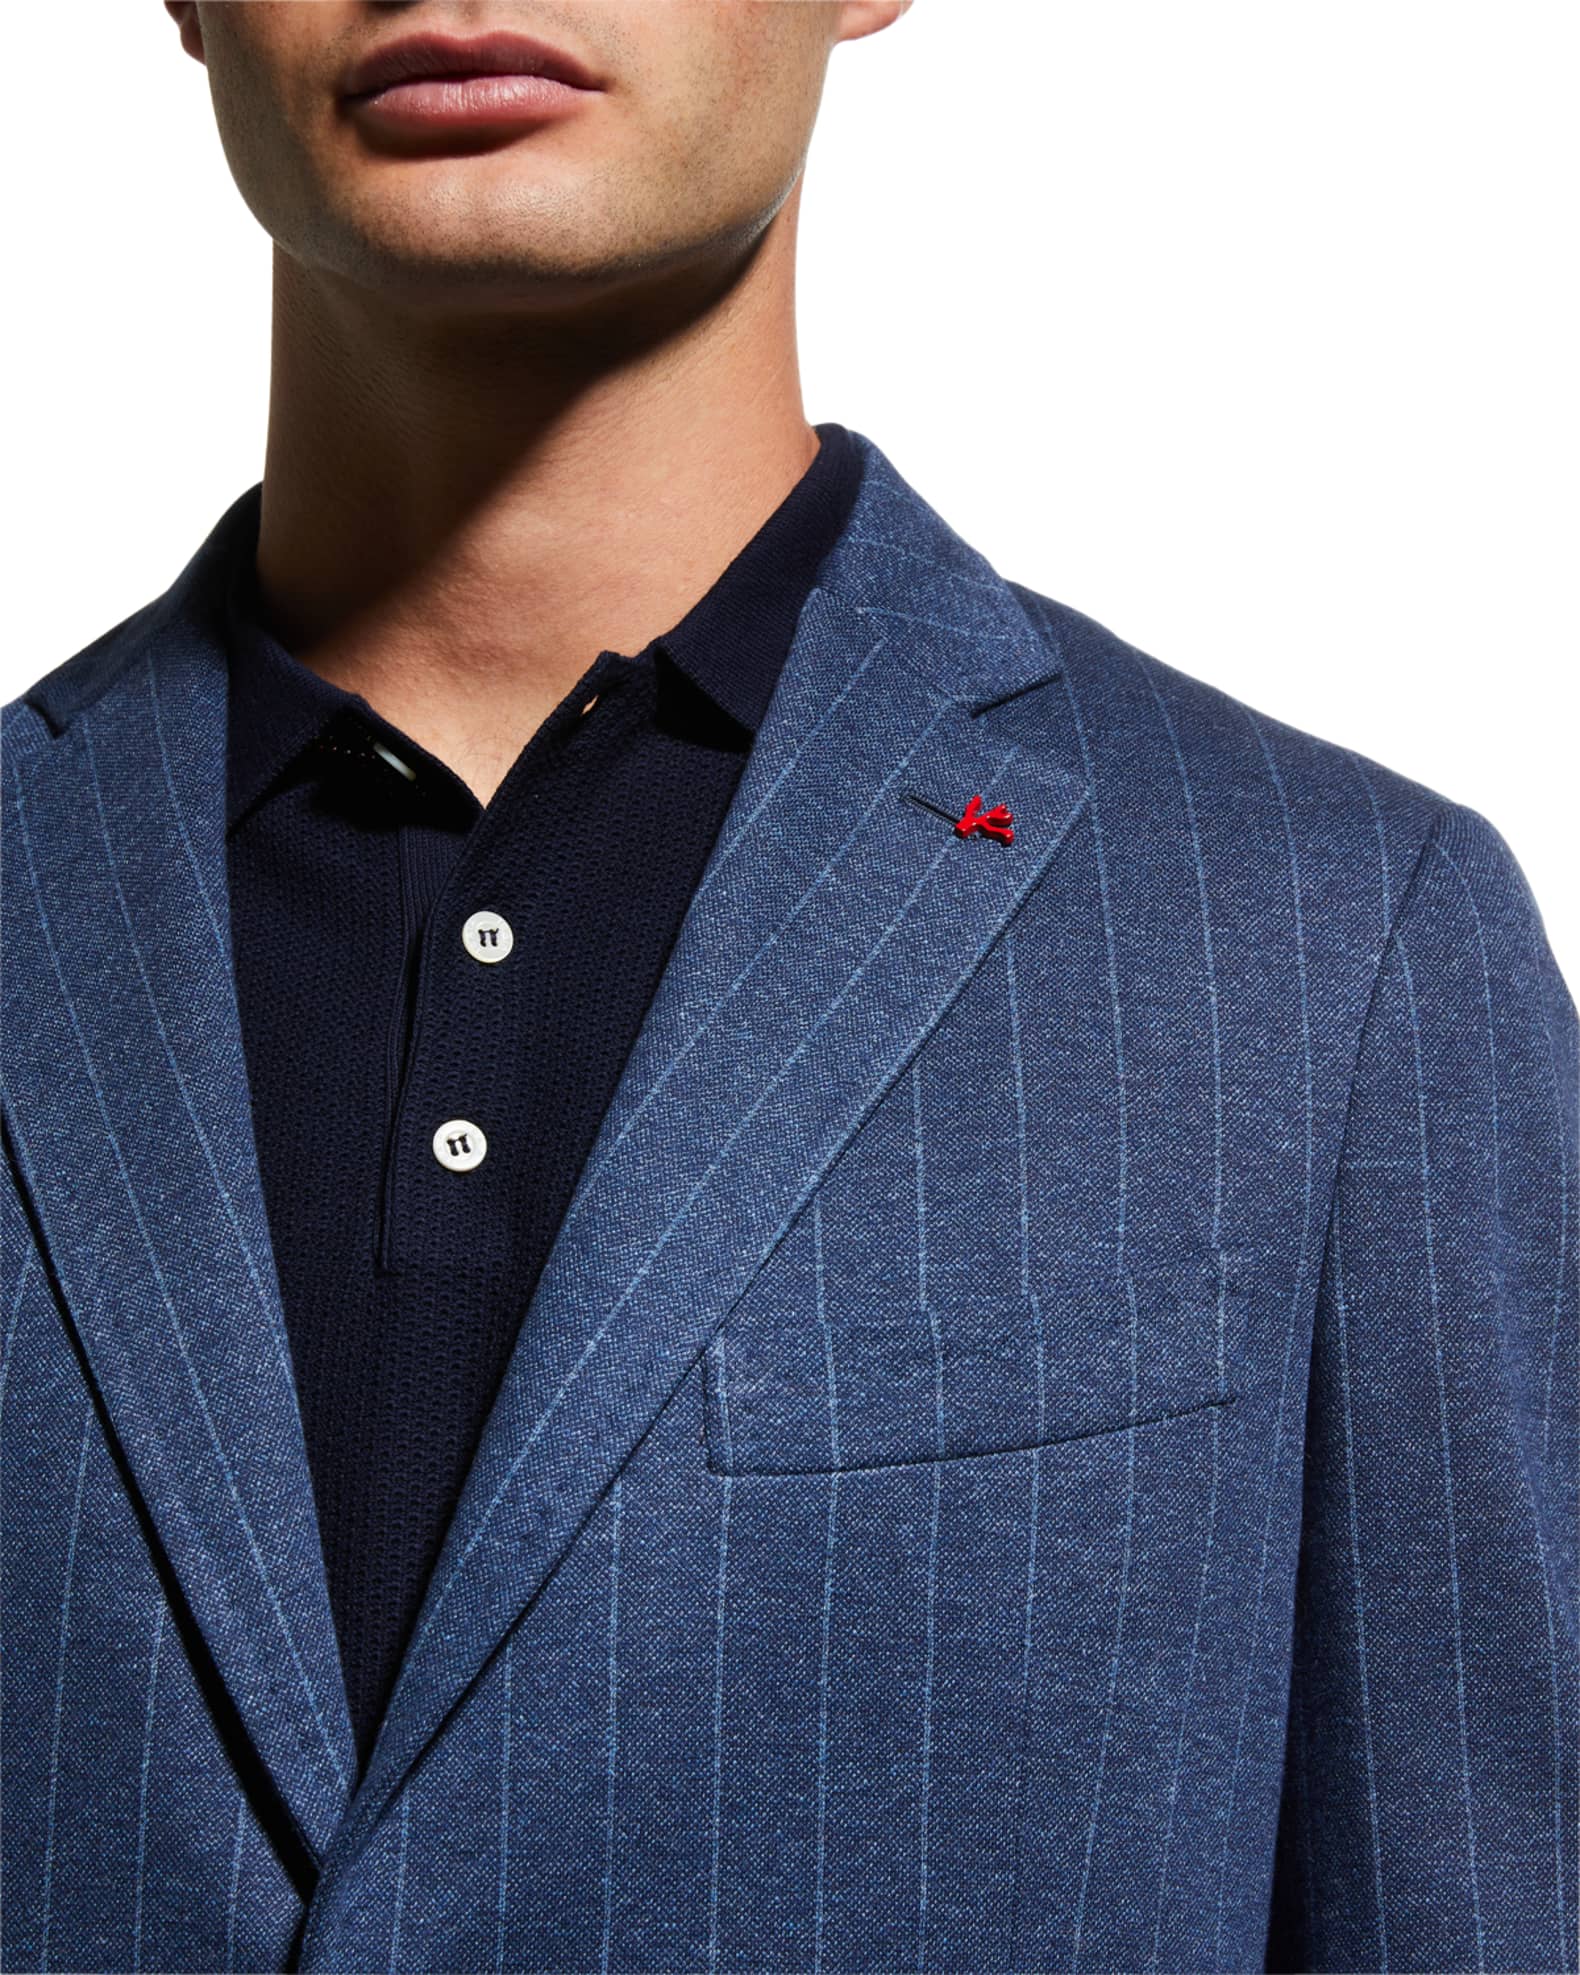 Isaia Men's Striped Jersey Suit | Neiman Marcus